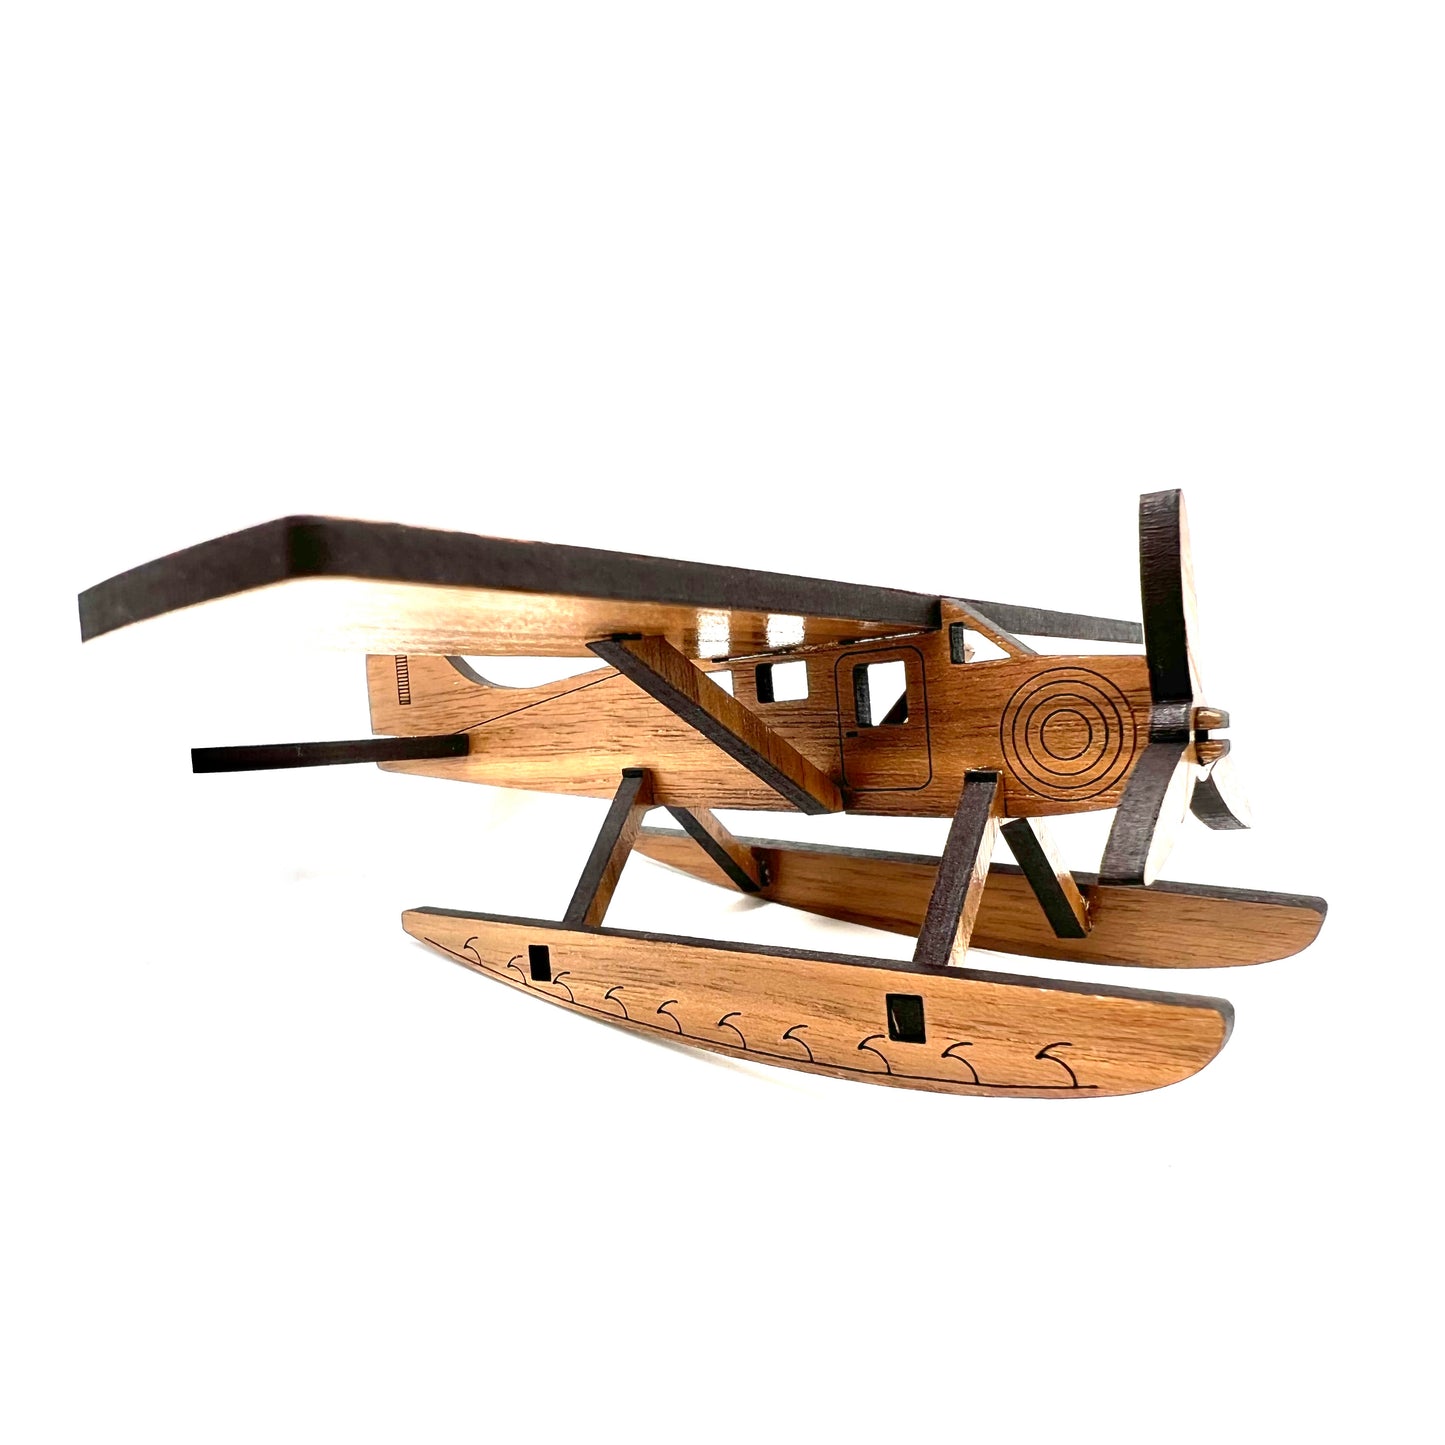 Seaplane Model